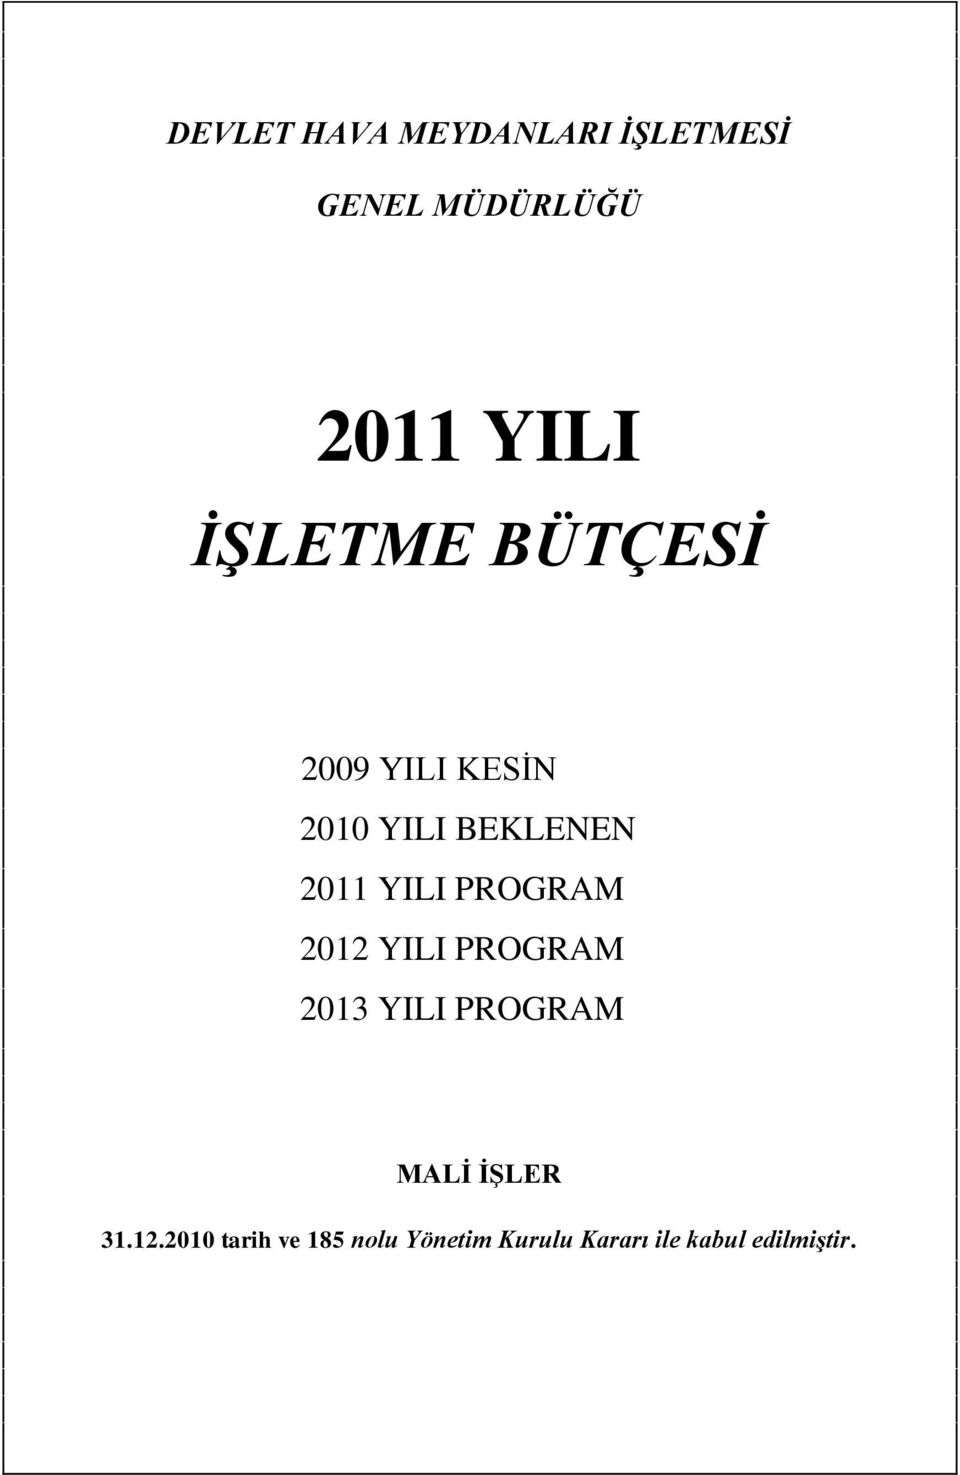 PROGRAM 2012 